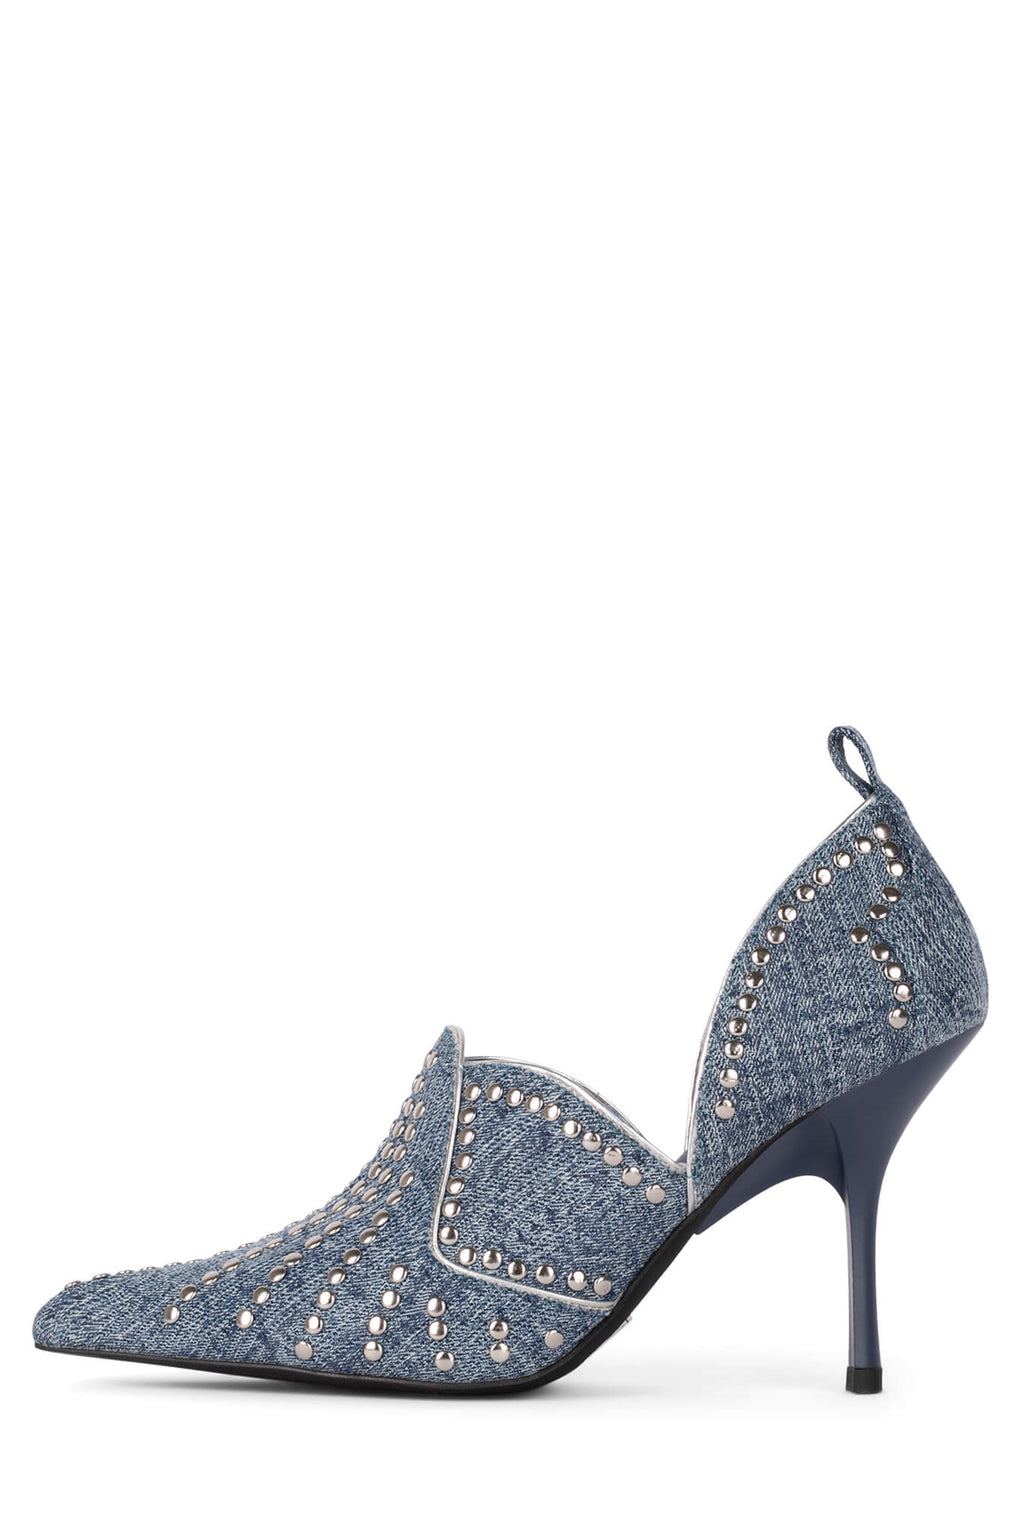 Blue Rhinestone & Bow Decor Heeled Slingback | Ally Fashion